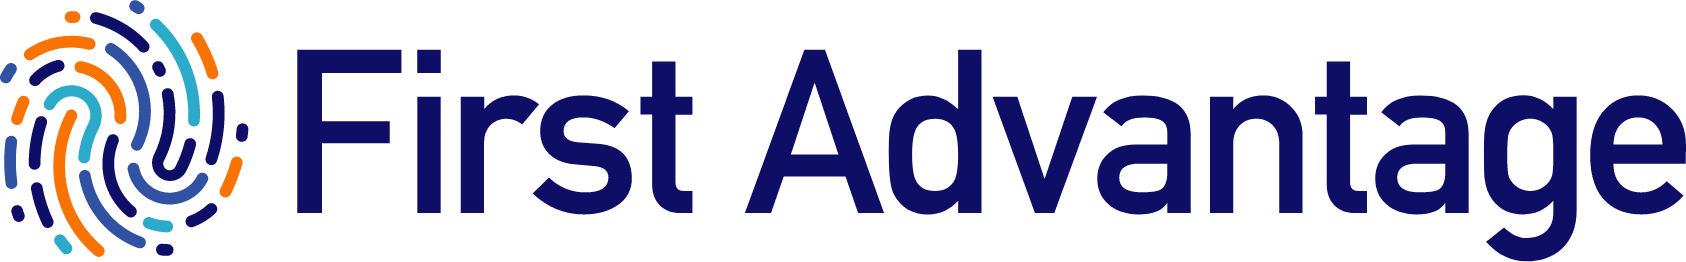 First Advantage logo large (transparent PNG)